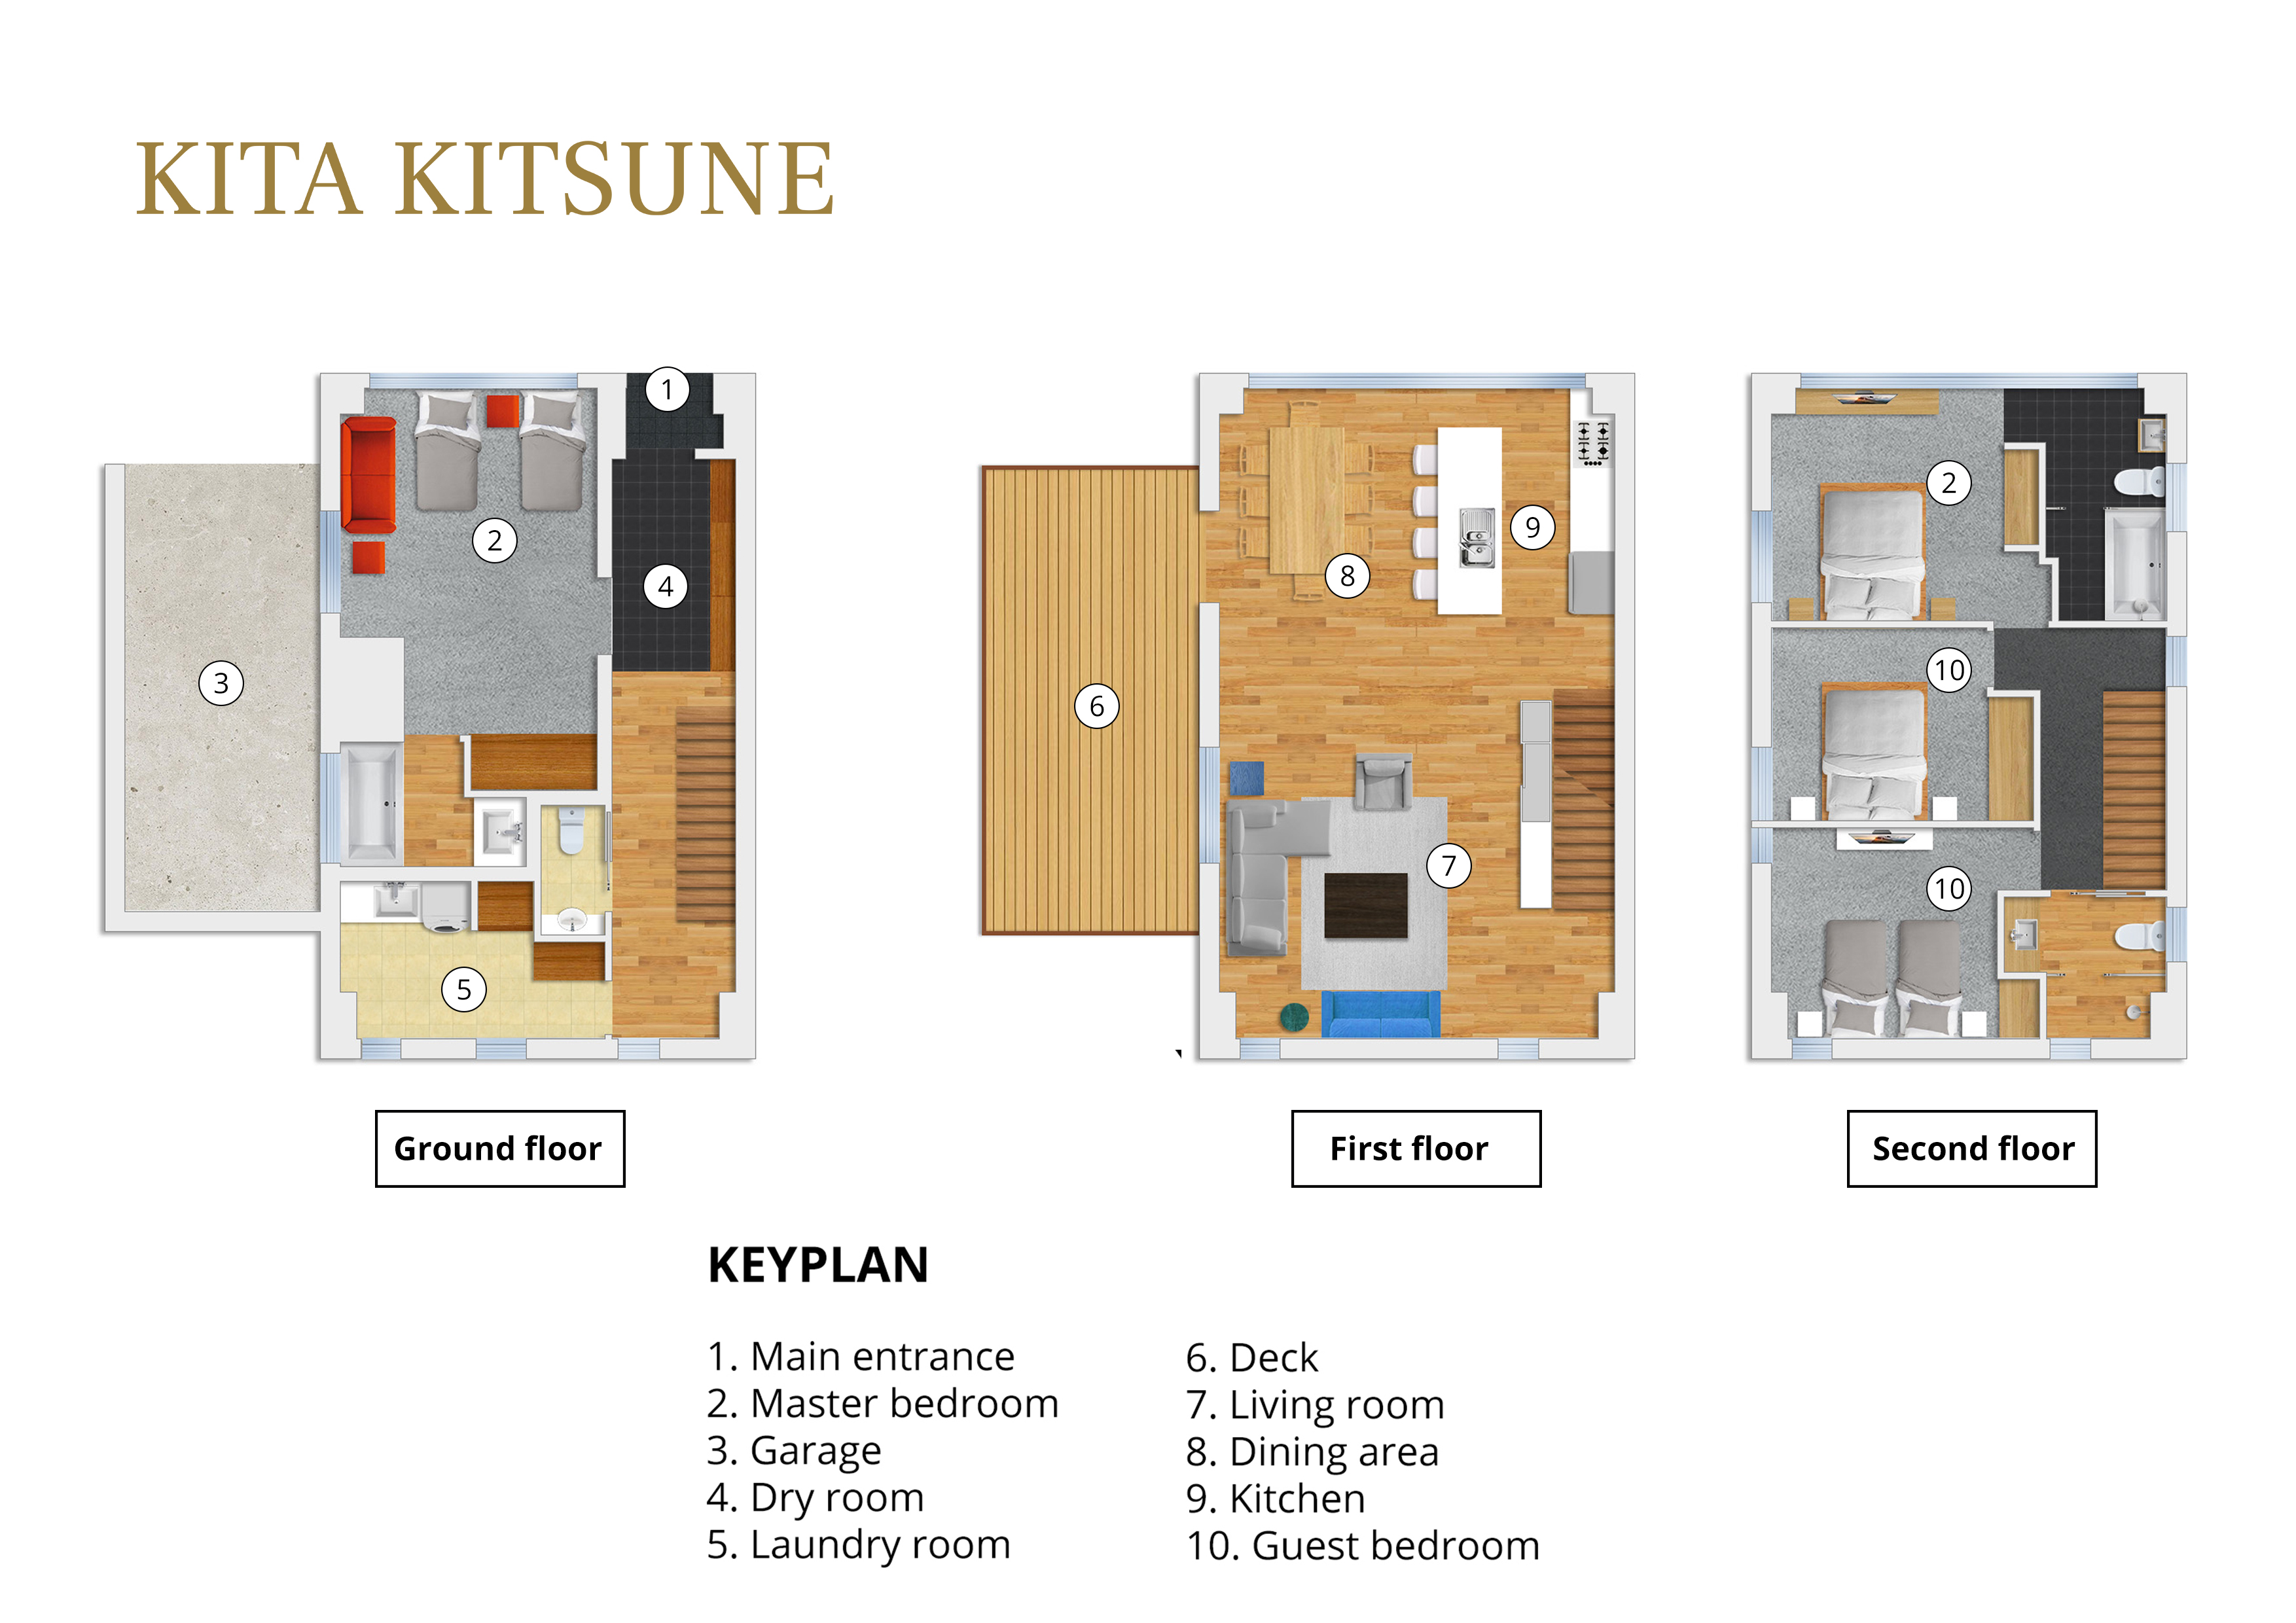 Kita Kitsune - Floorplan